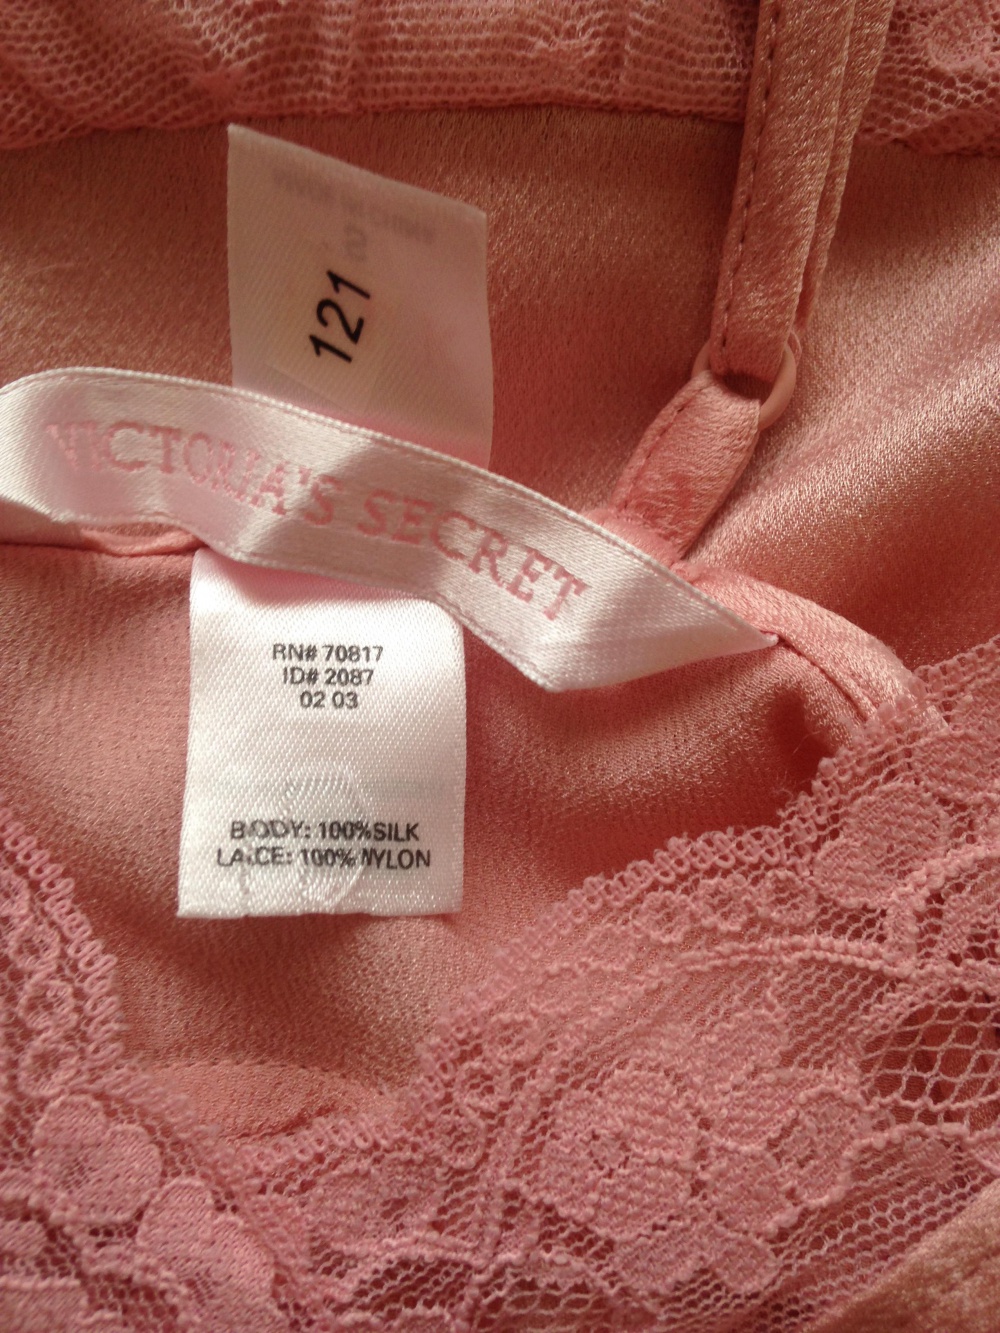 Victoria's Secret 100% Silk Baby Pink Babydoll Nightie Lace and Ruffles, комплект - топ-сорочка и стринги, размер S